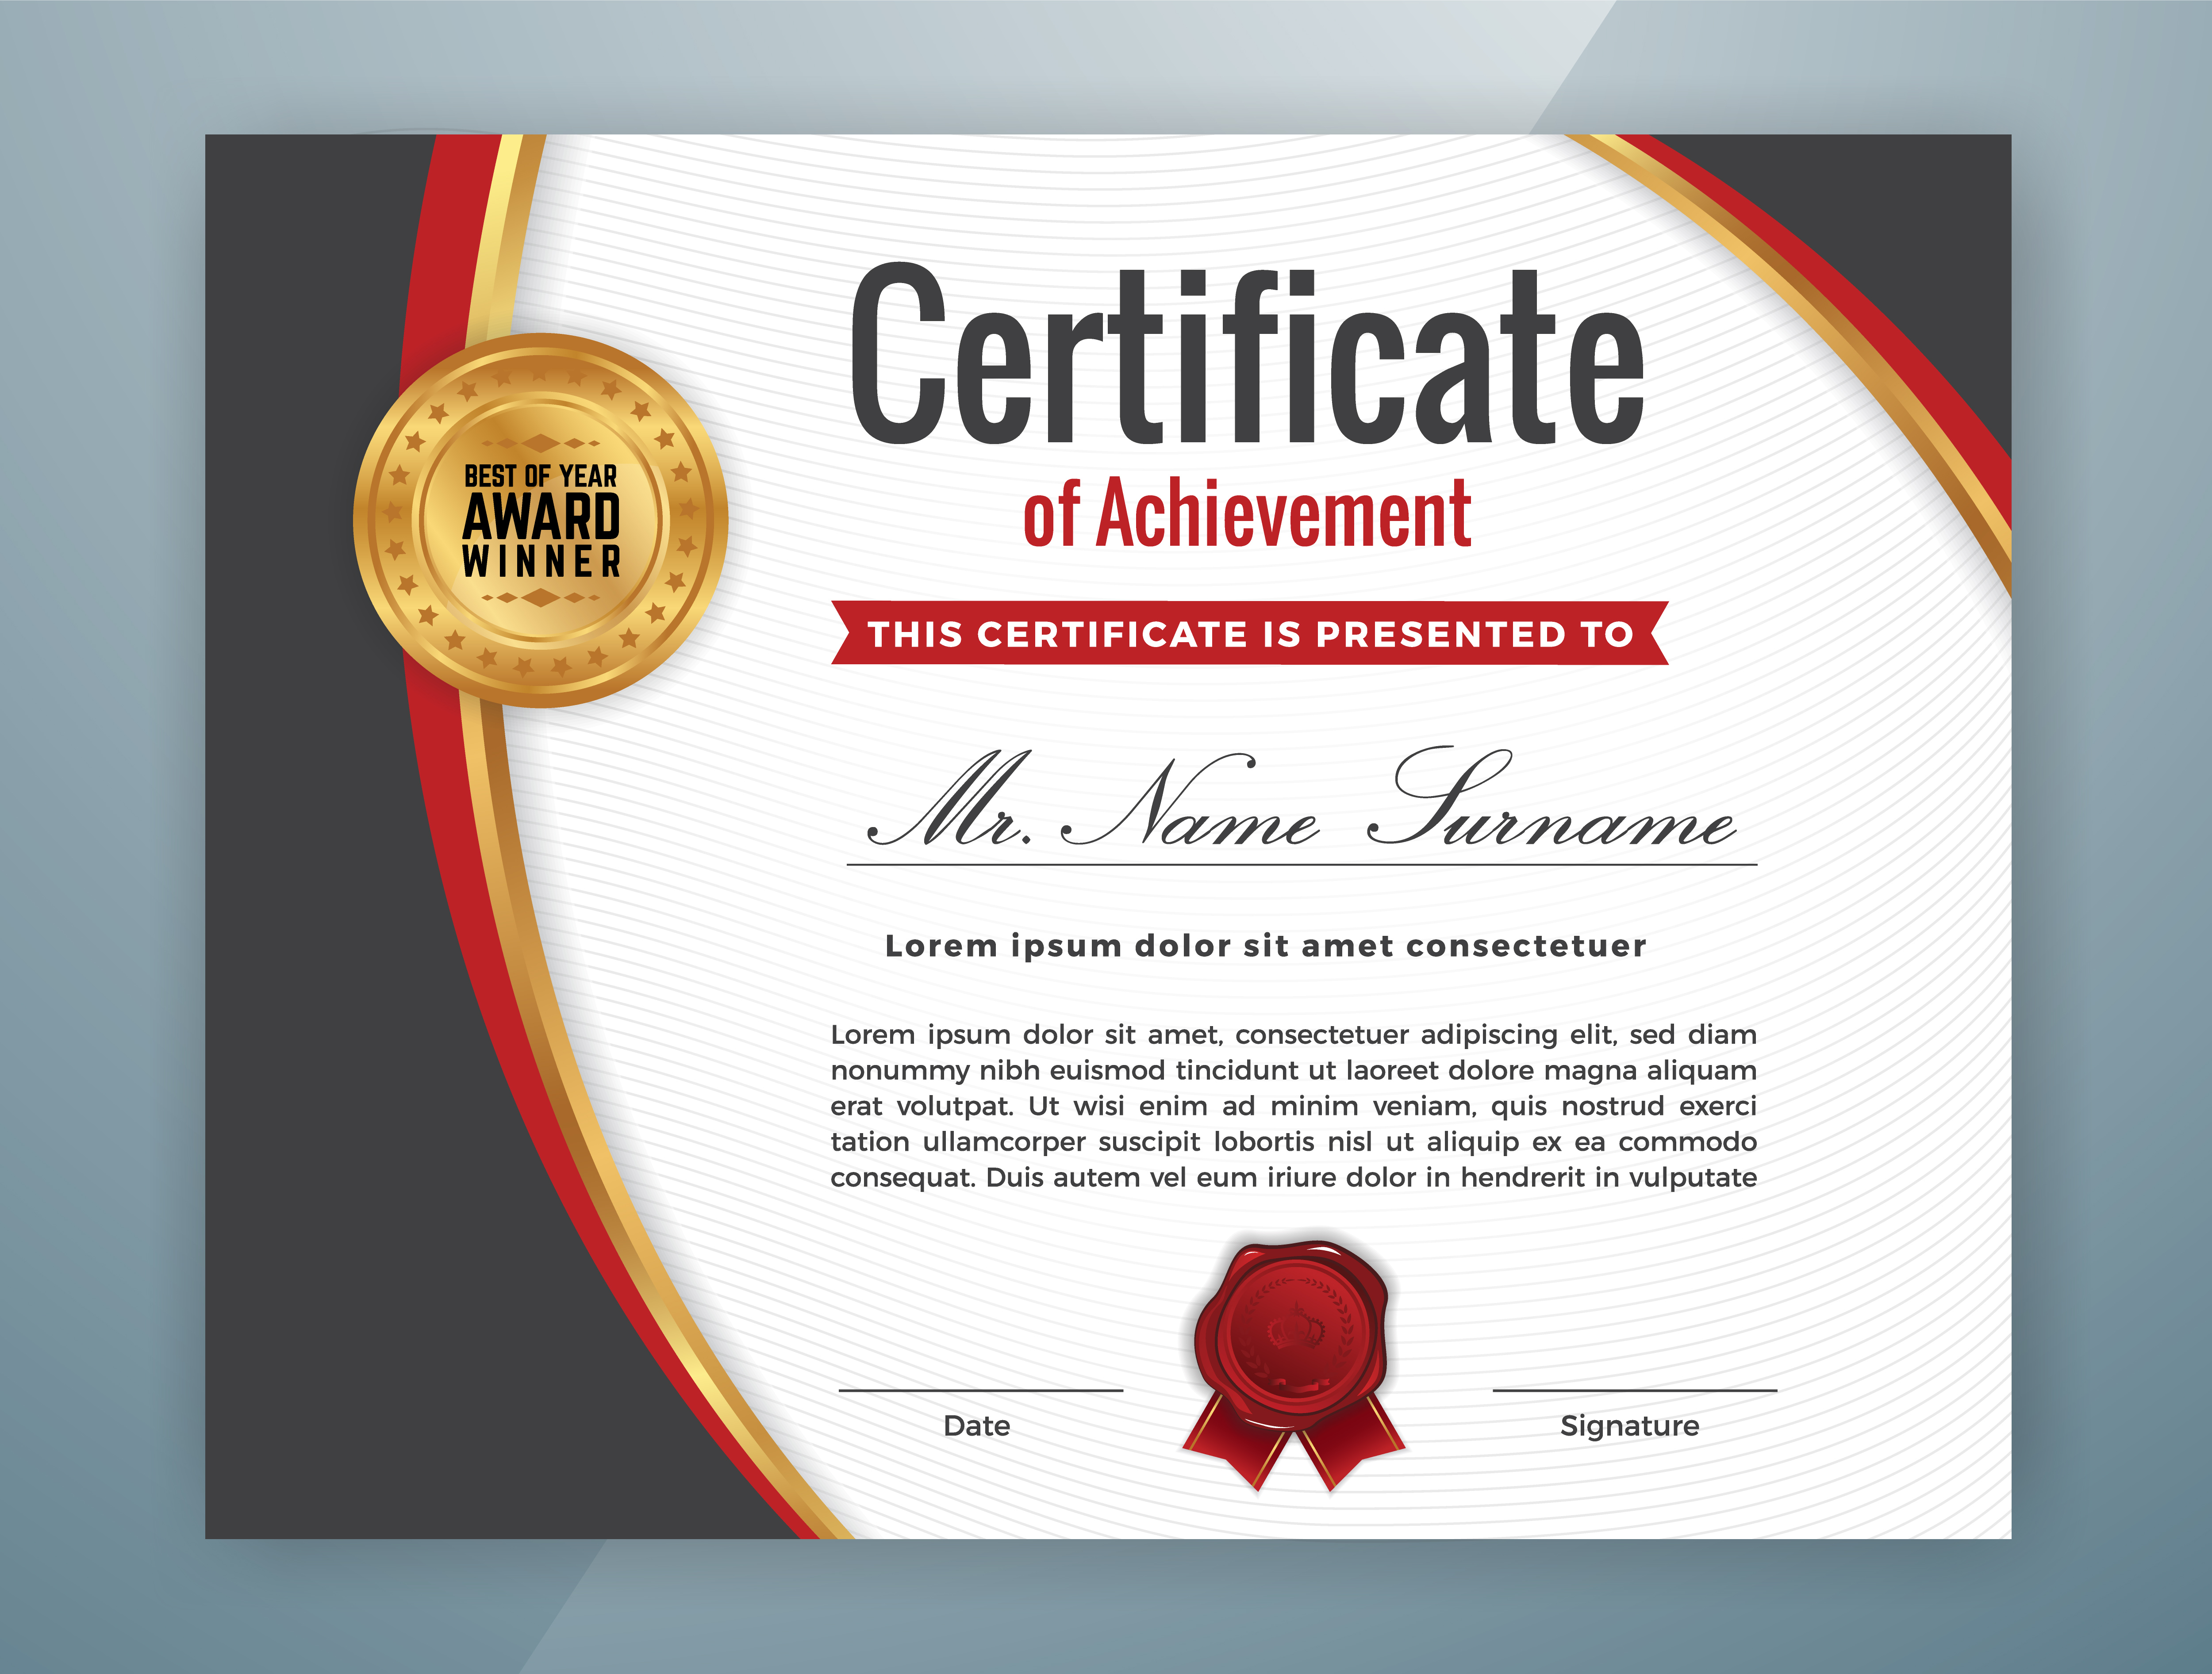 multipurpose-professional-certificate-template-design-237274-vector-art-at-vecteezy